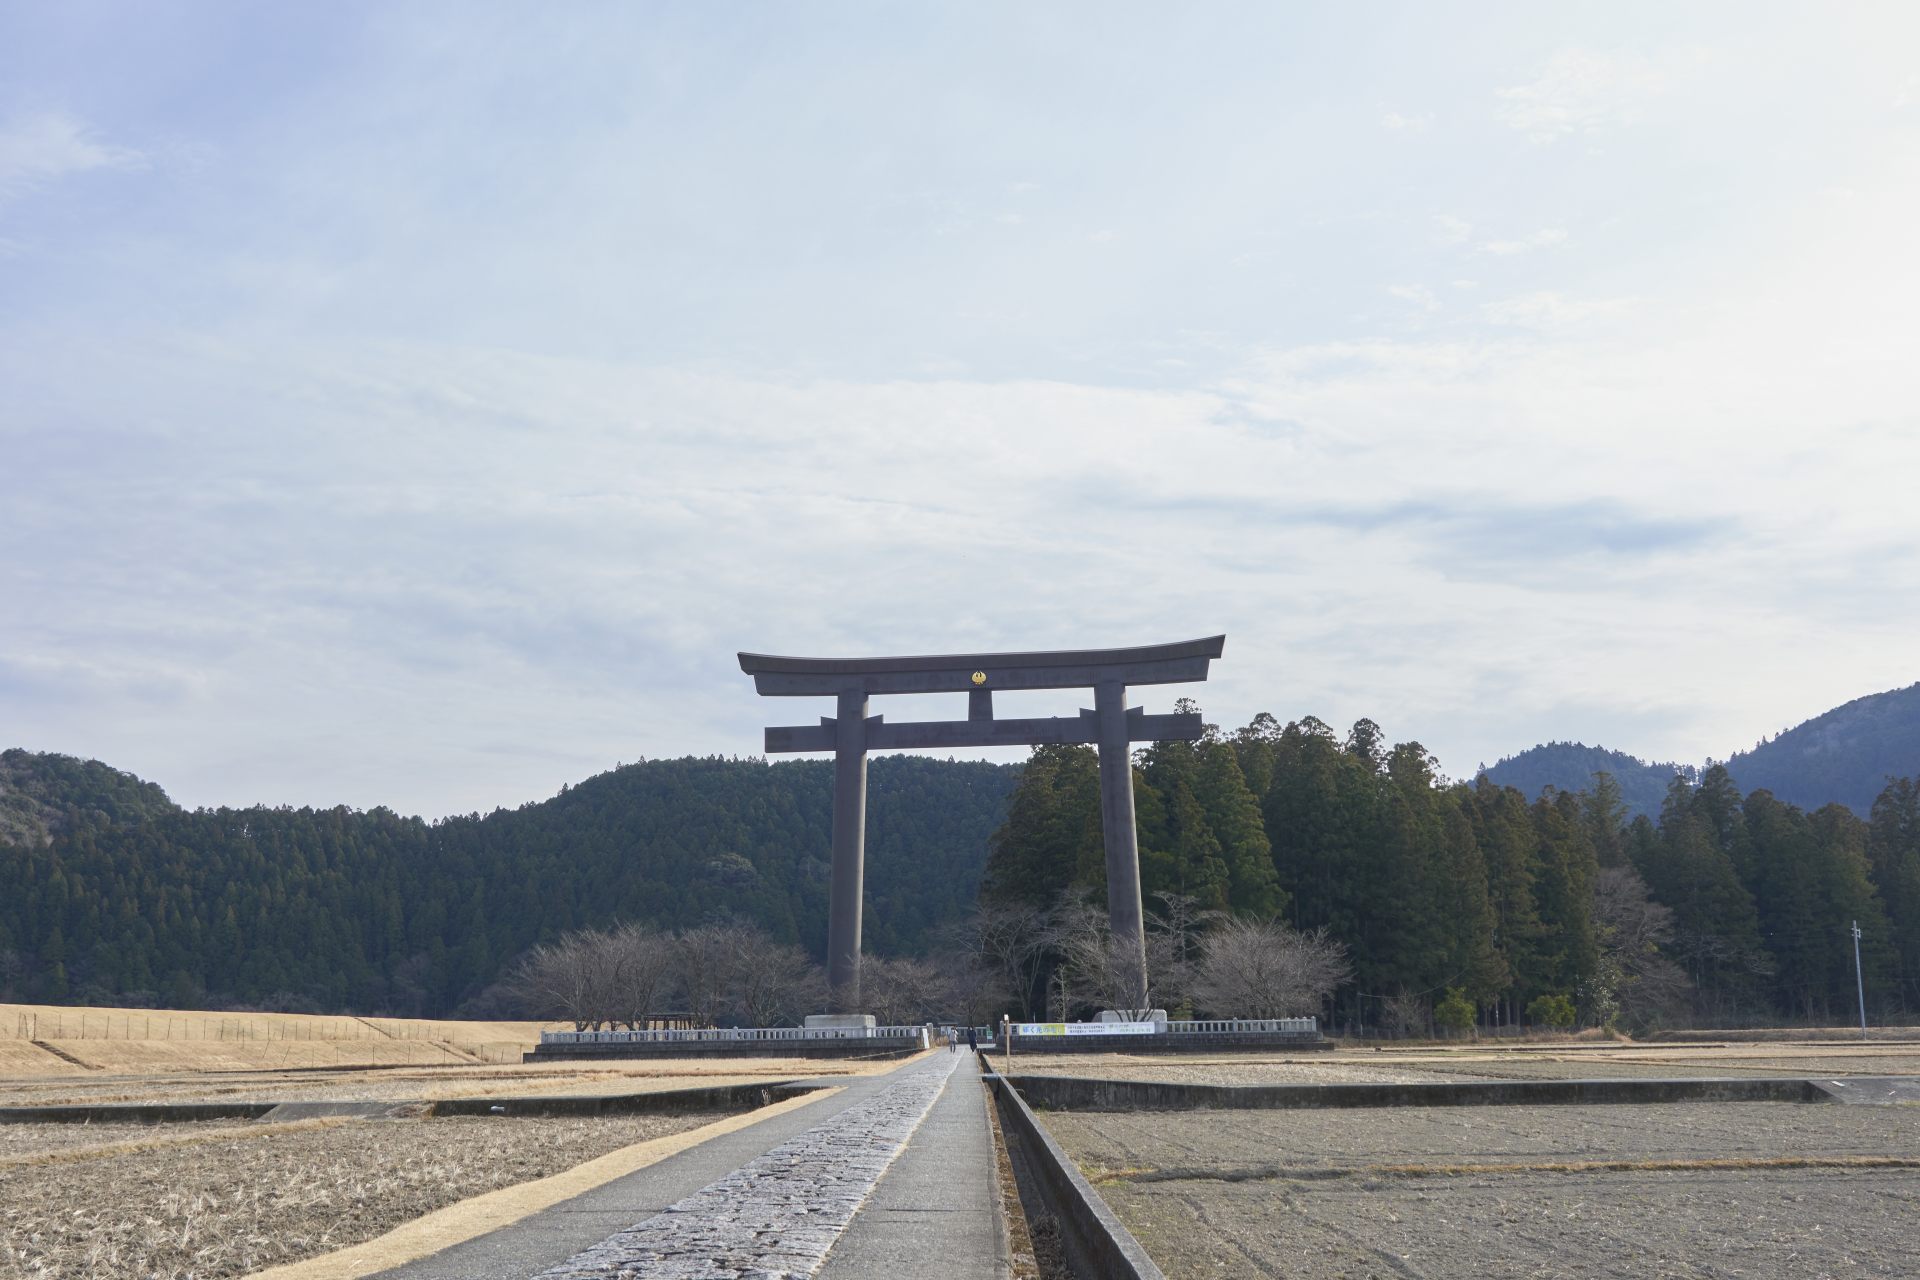  The striking torii of Oyunohara, Japan’s largest shrine gate 